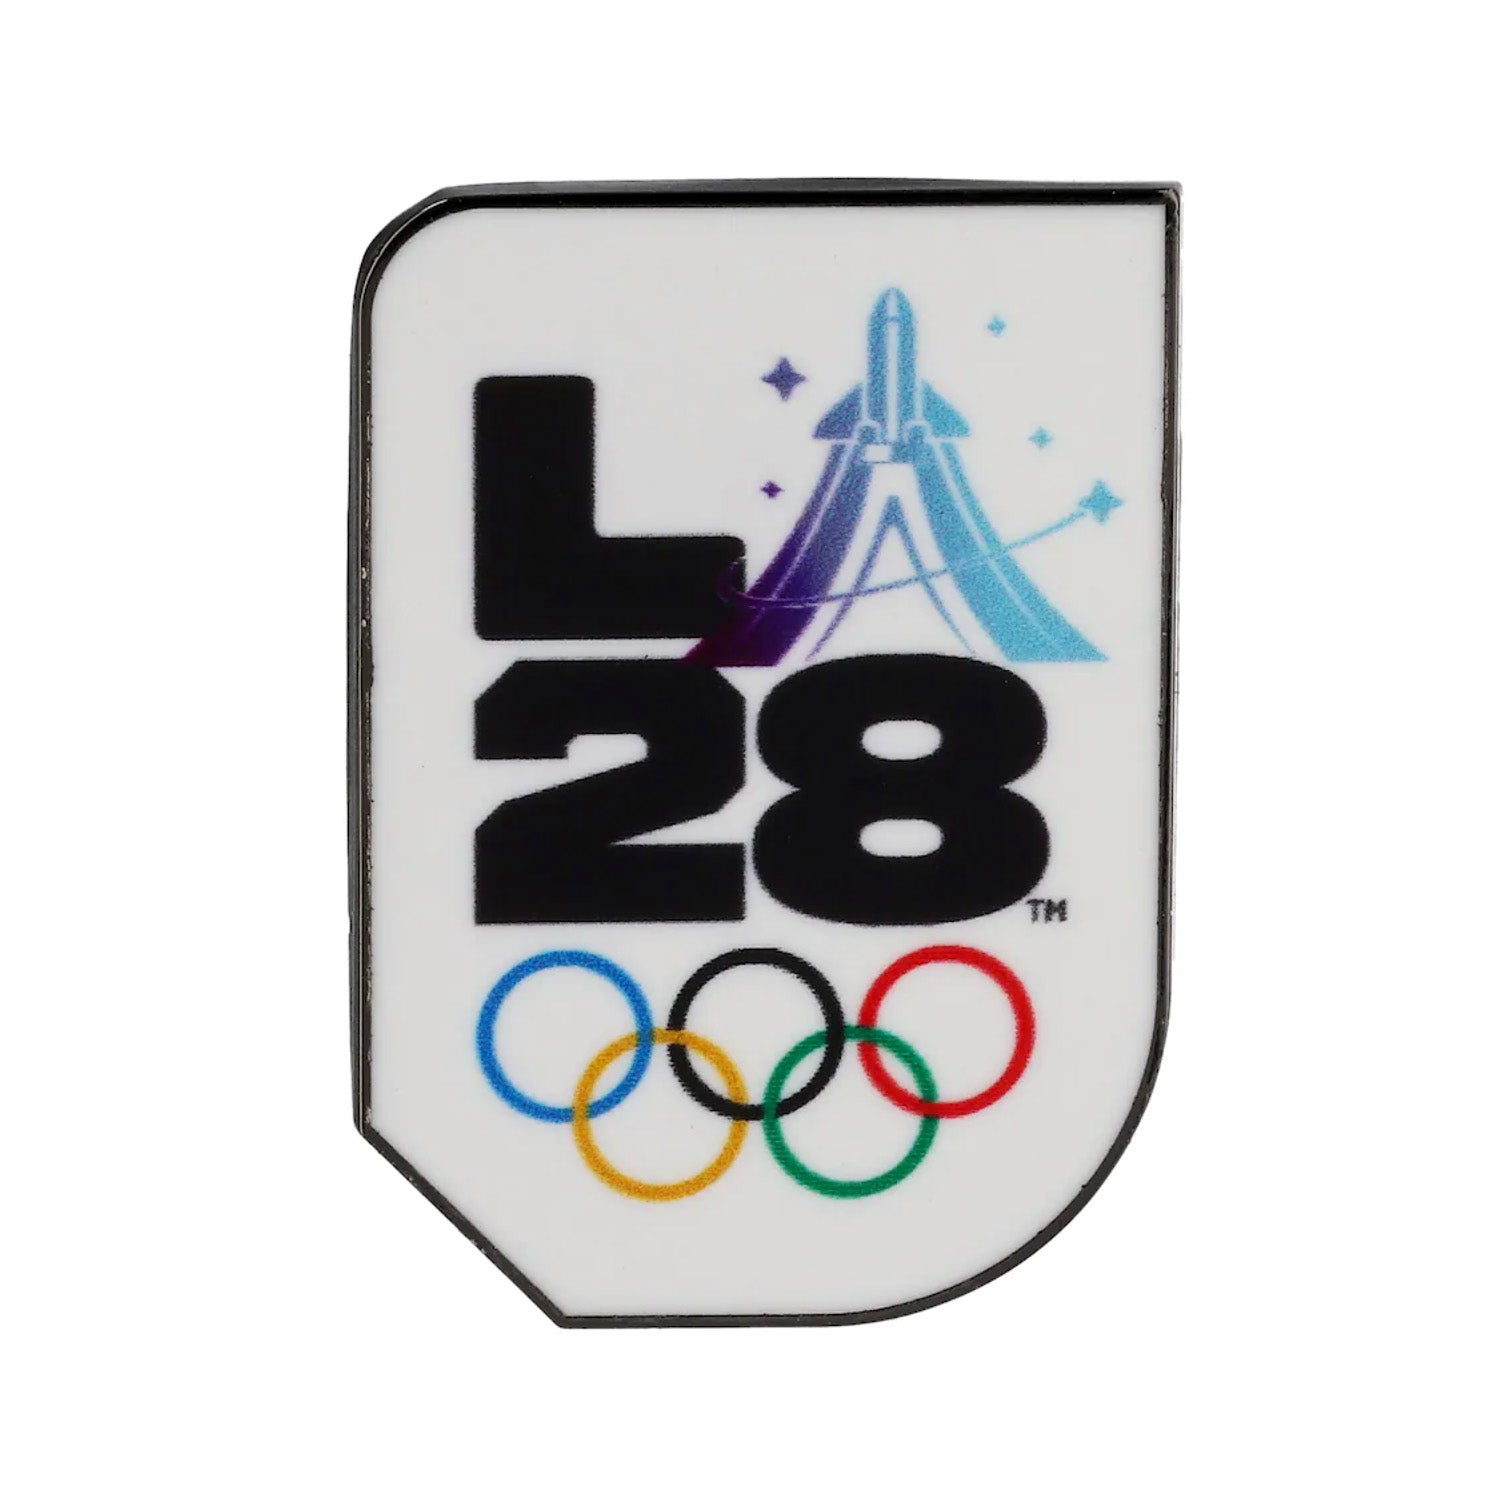 LA 2028 Olympics Logo in Space Travel